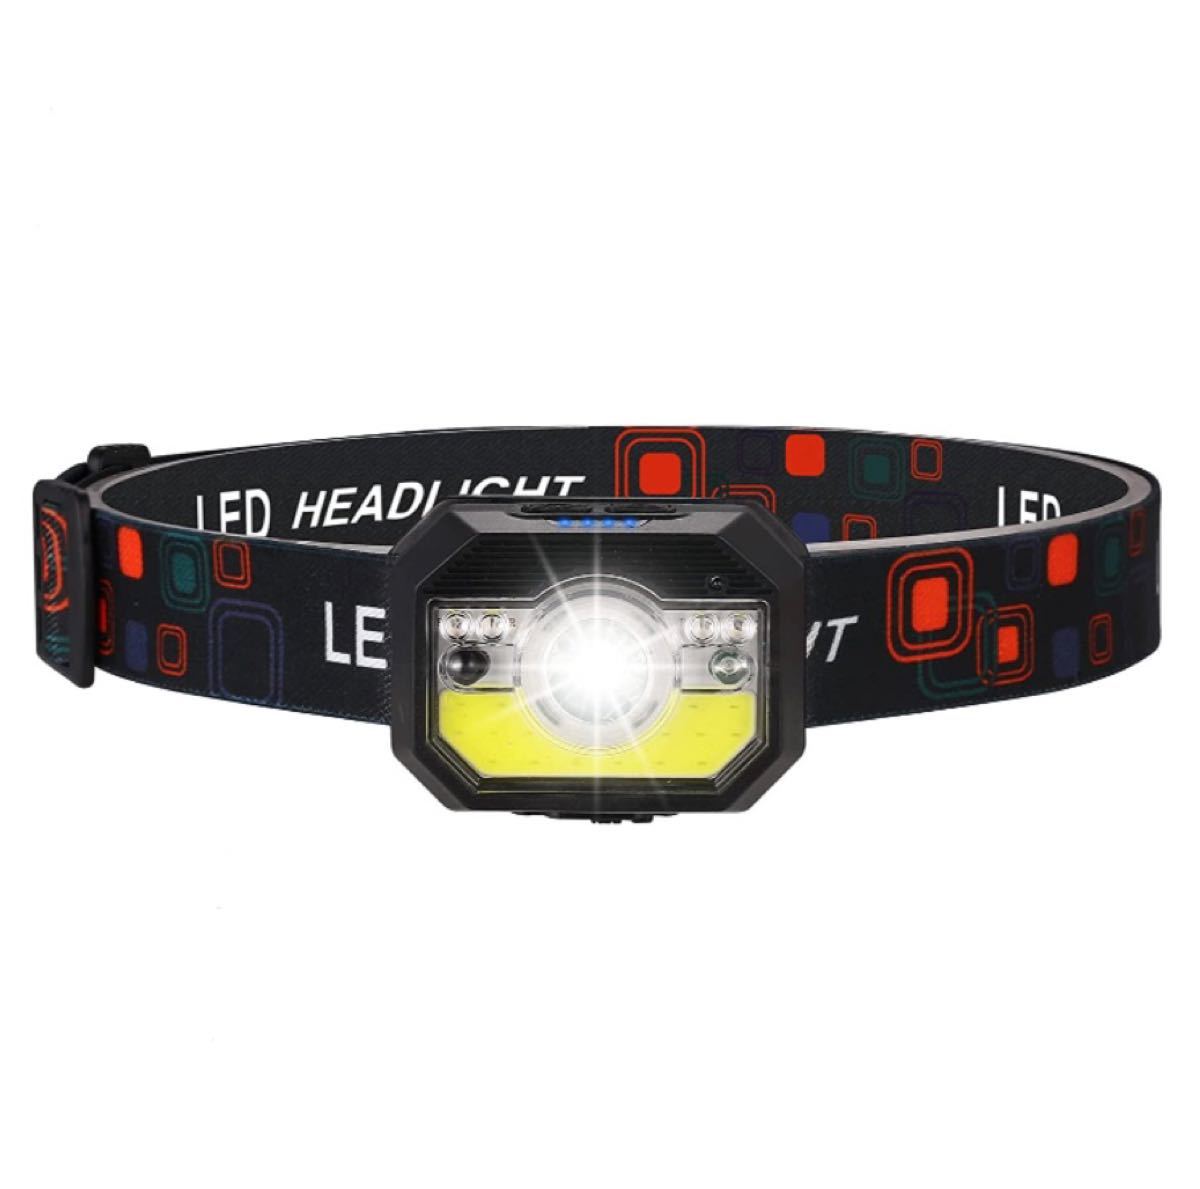 LED ヘッドライト センサー COB USB充電式 9モード 高輝度 生活防水 作業灯 キャンプ 散歩登山釣り 作業 アウトドア